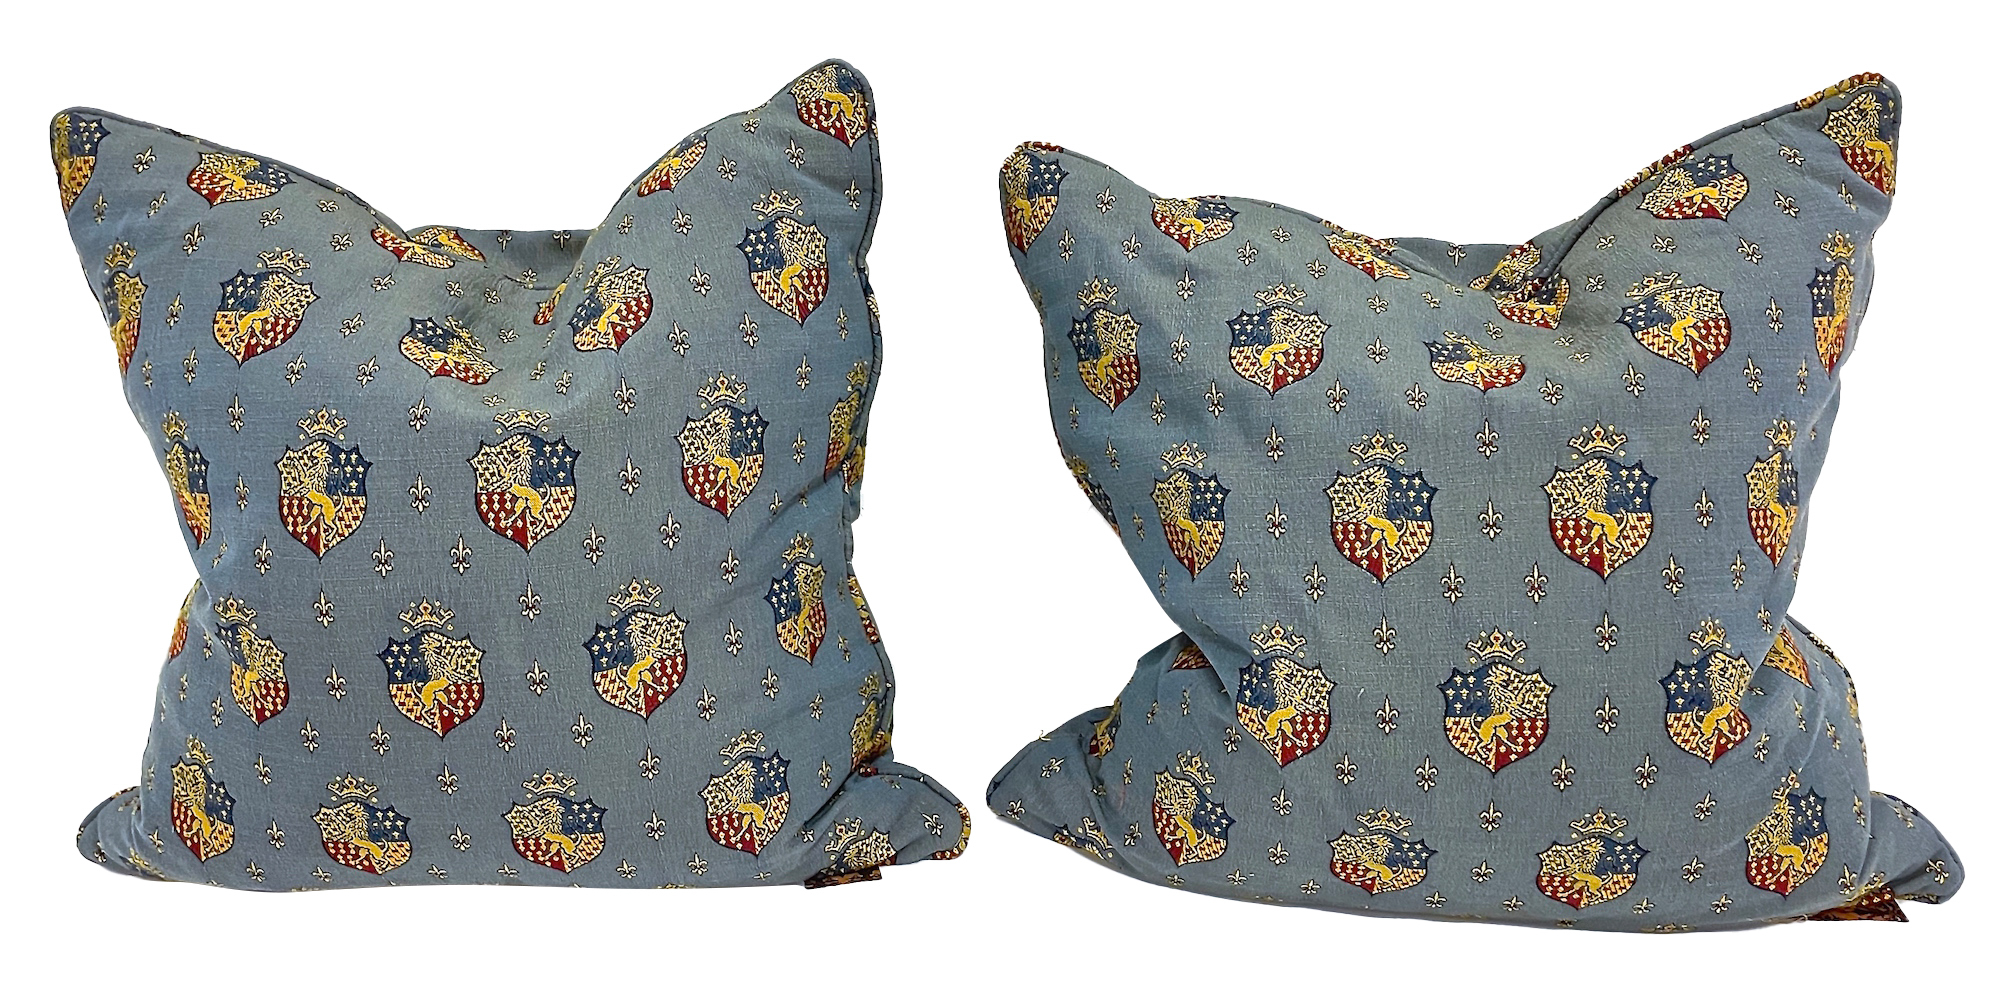 Armorial Crest Pillows, Pair